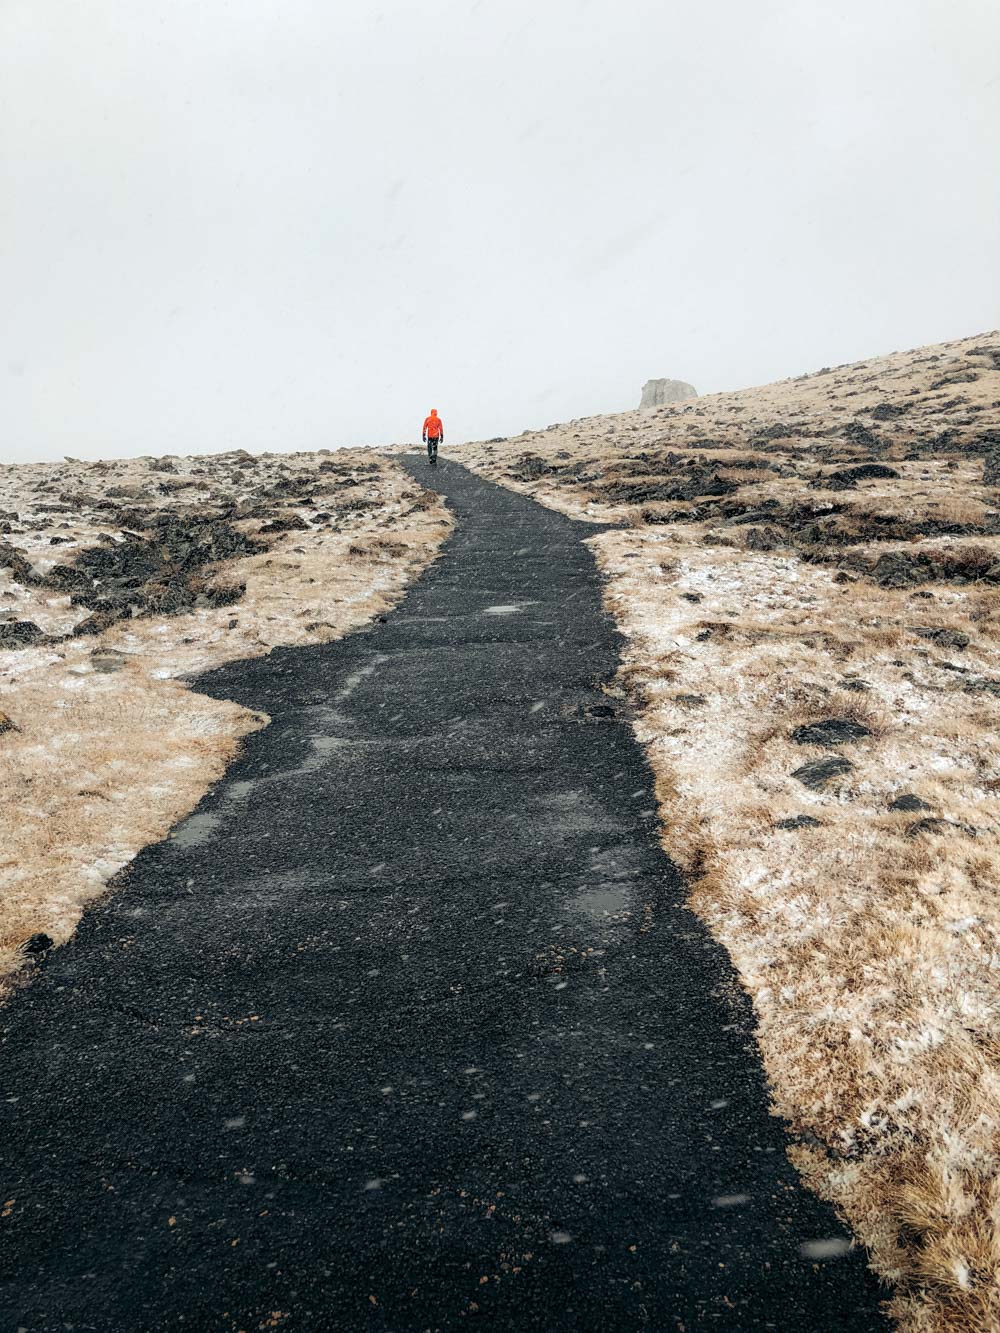 Tundra Communities Trail Hike - Roads and Destinations